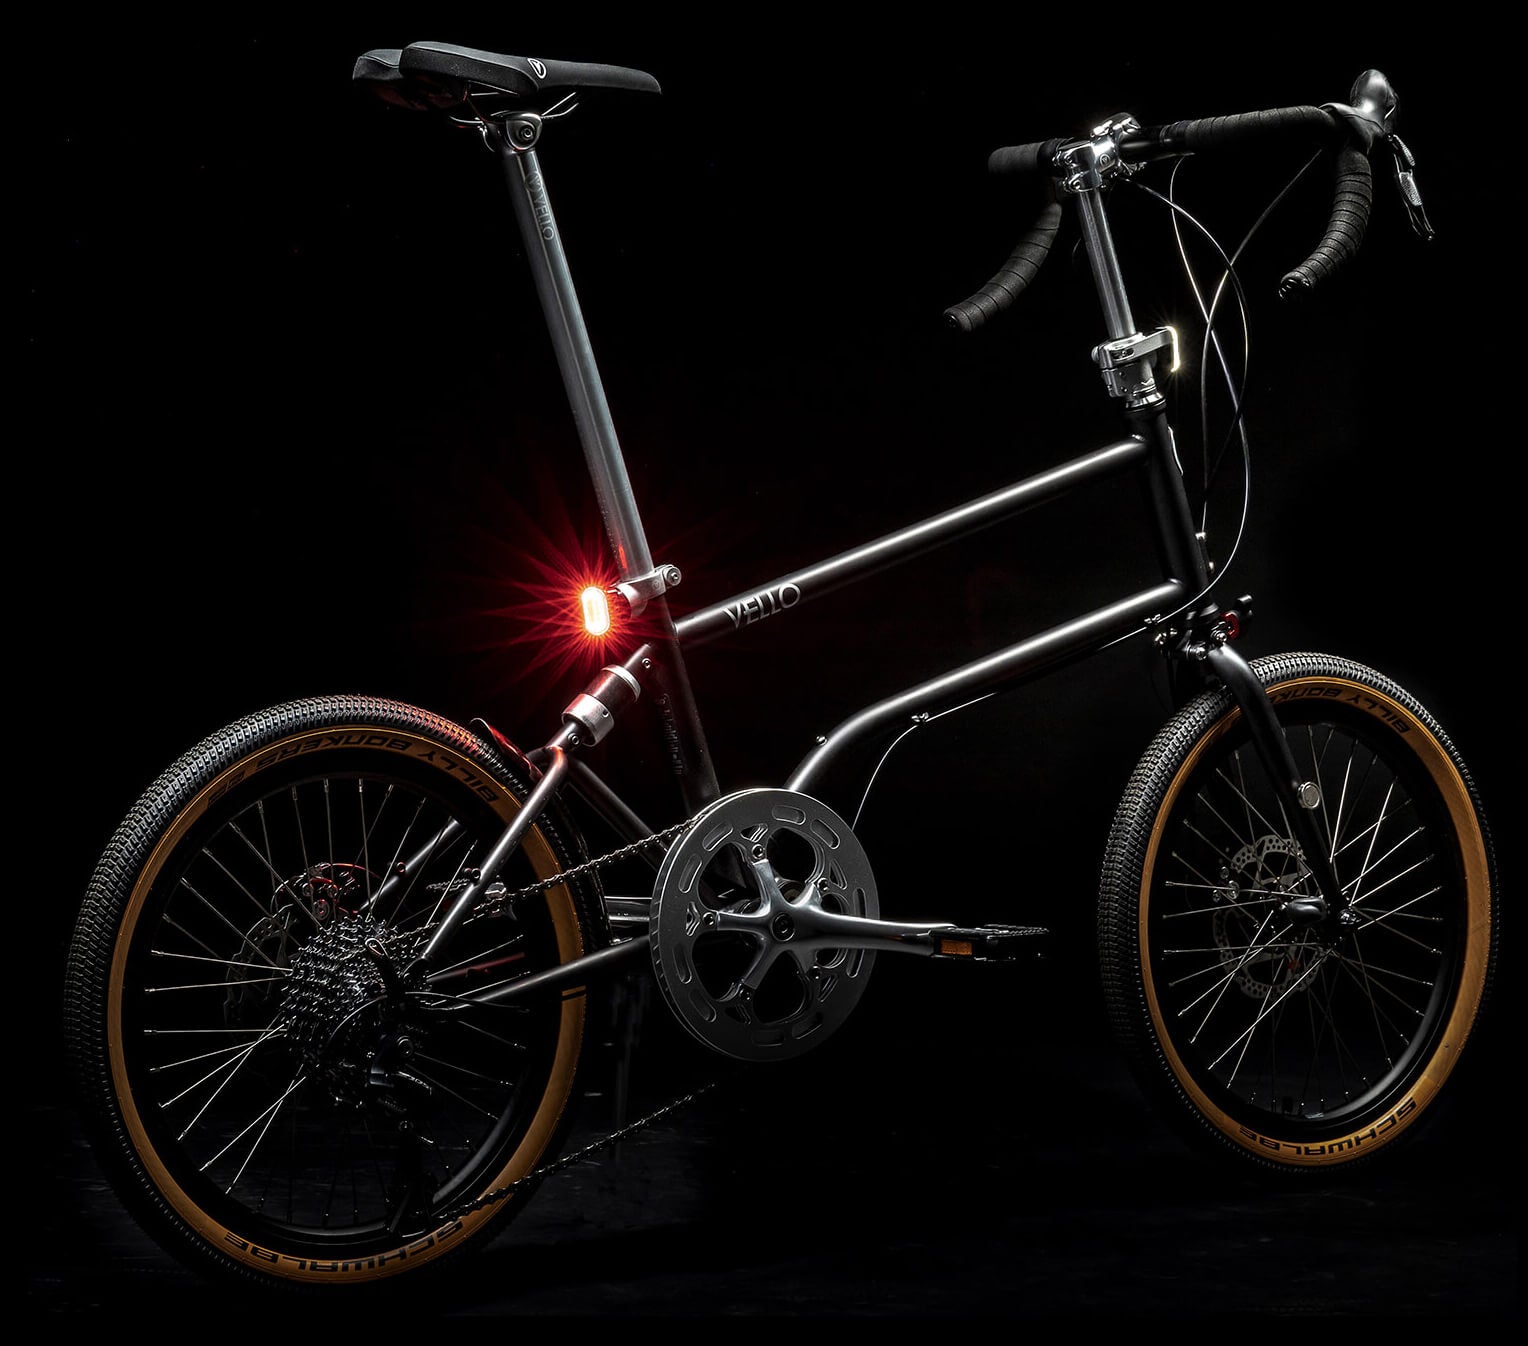 VELLO Folding Bike - Travel Bike - Compact Folding Bicycle - Bike Lights - Designer Bike Innovation